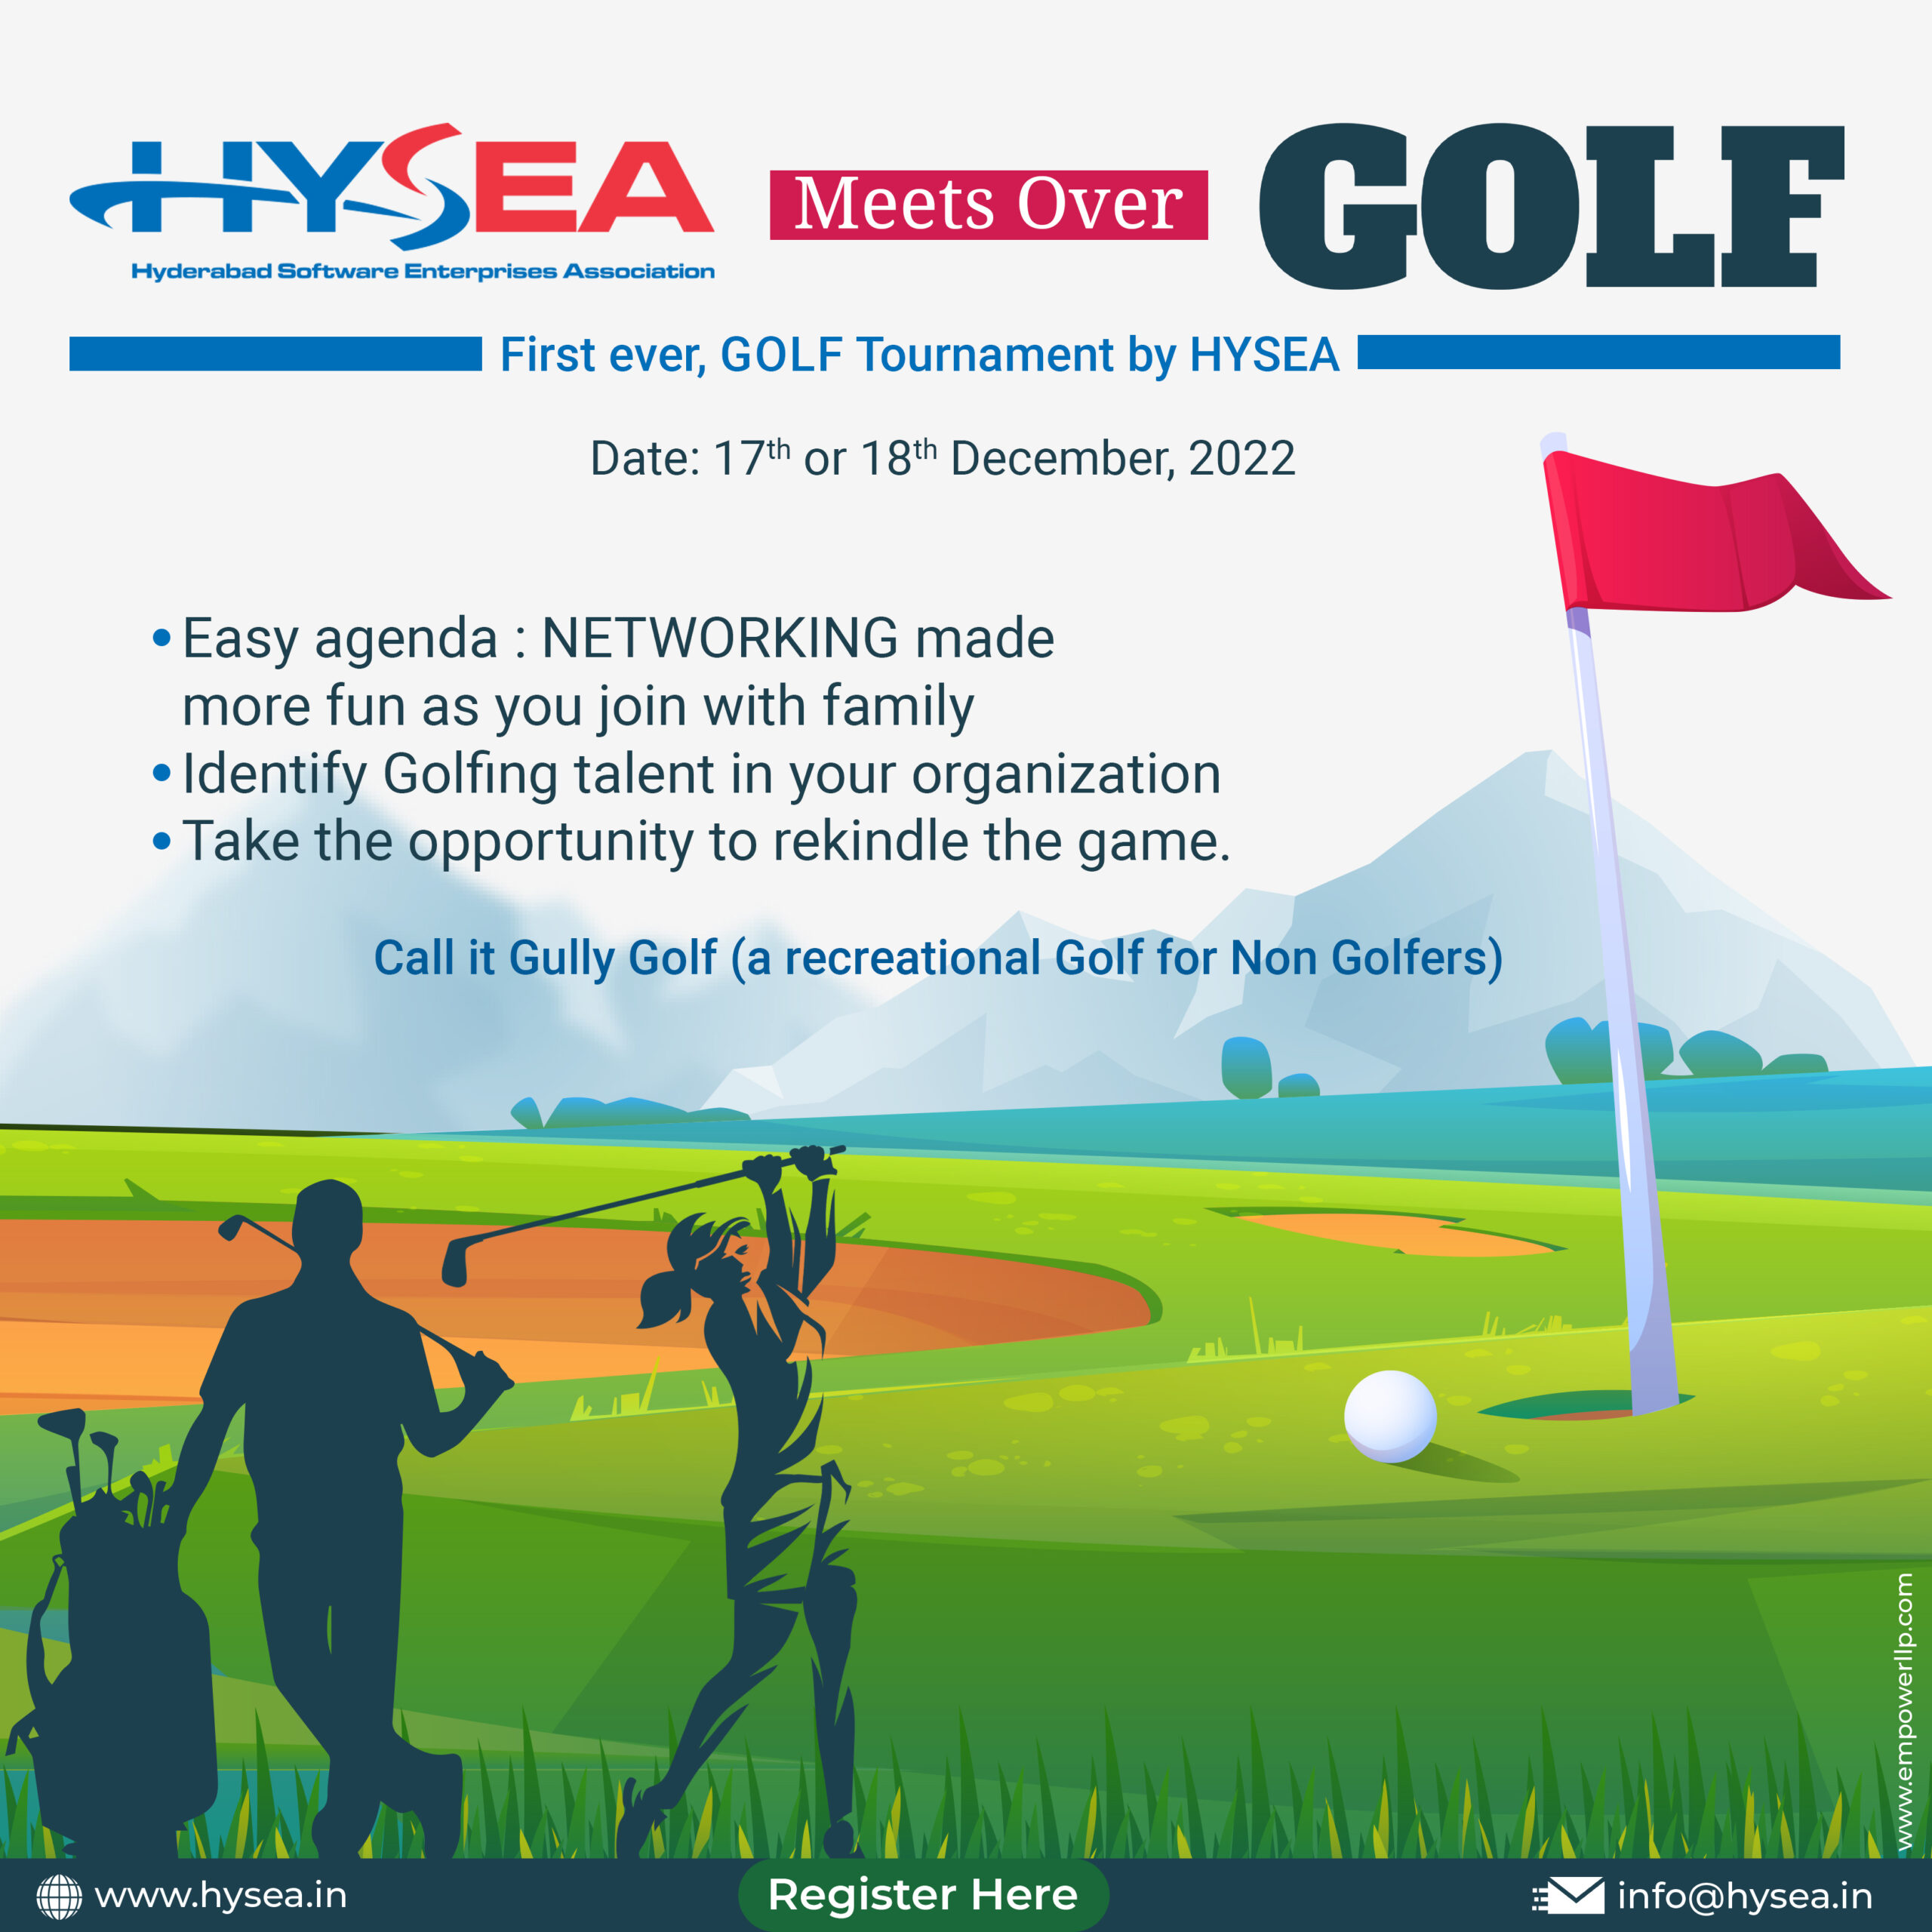 HYSEA meets over Golf